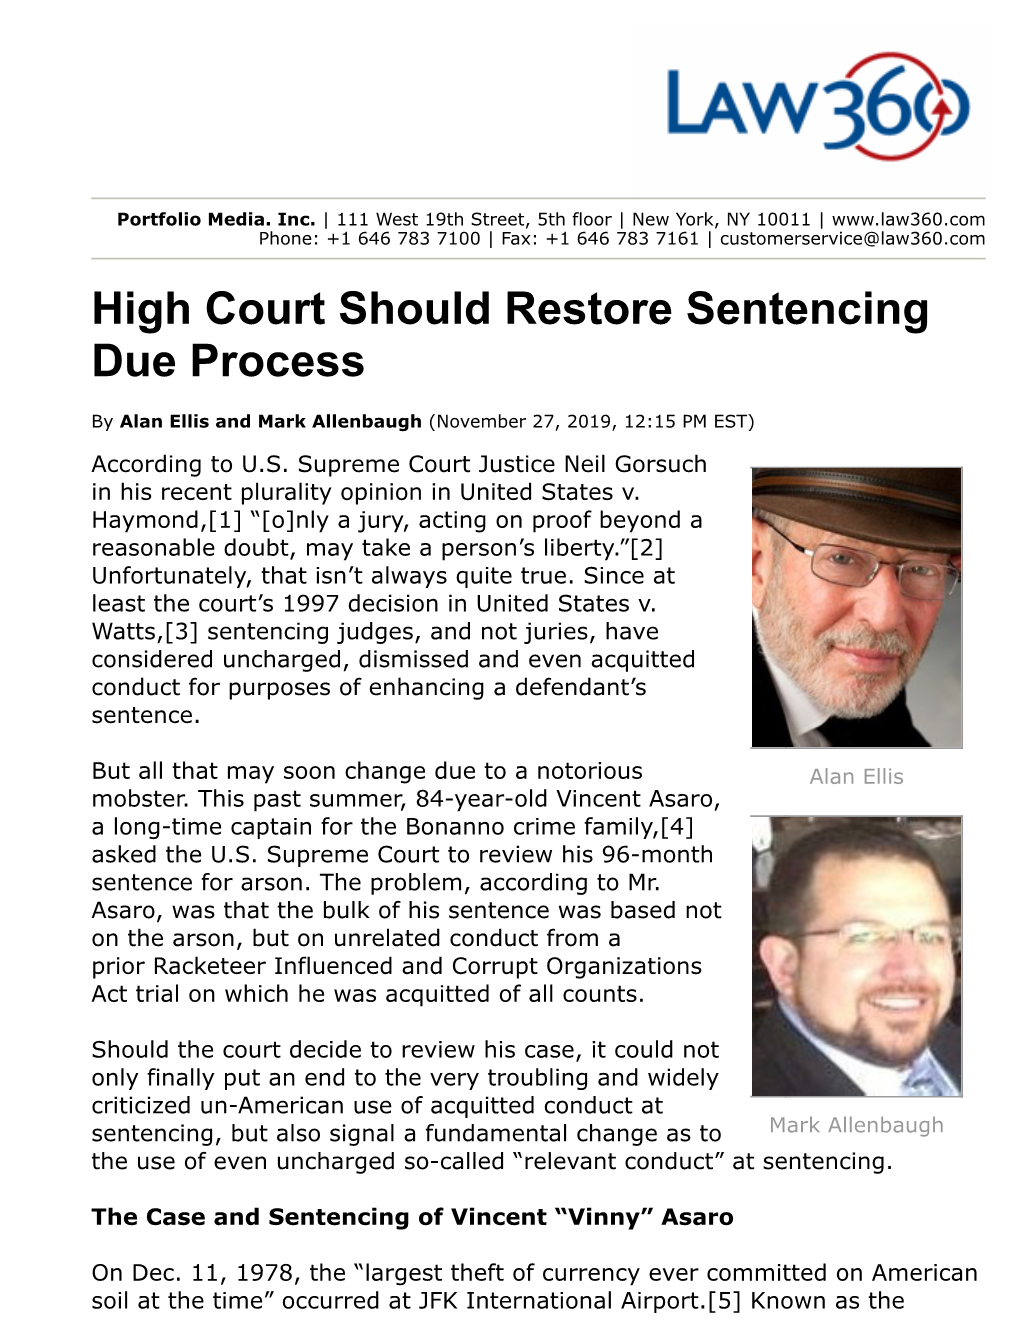 High Court Should Restore Sentencing Due Process